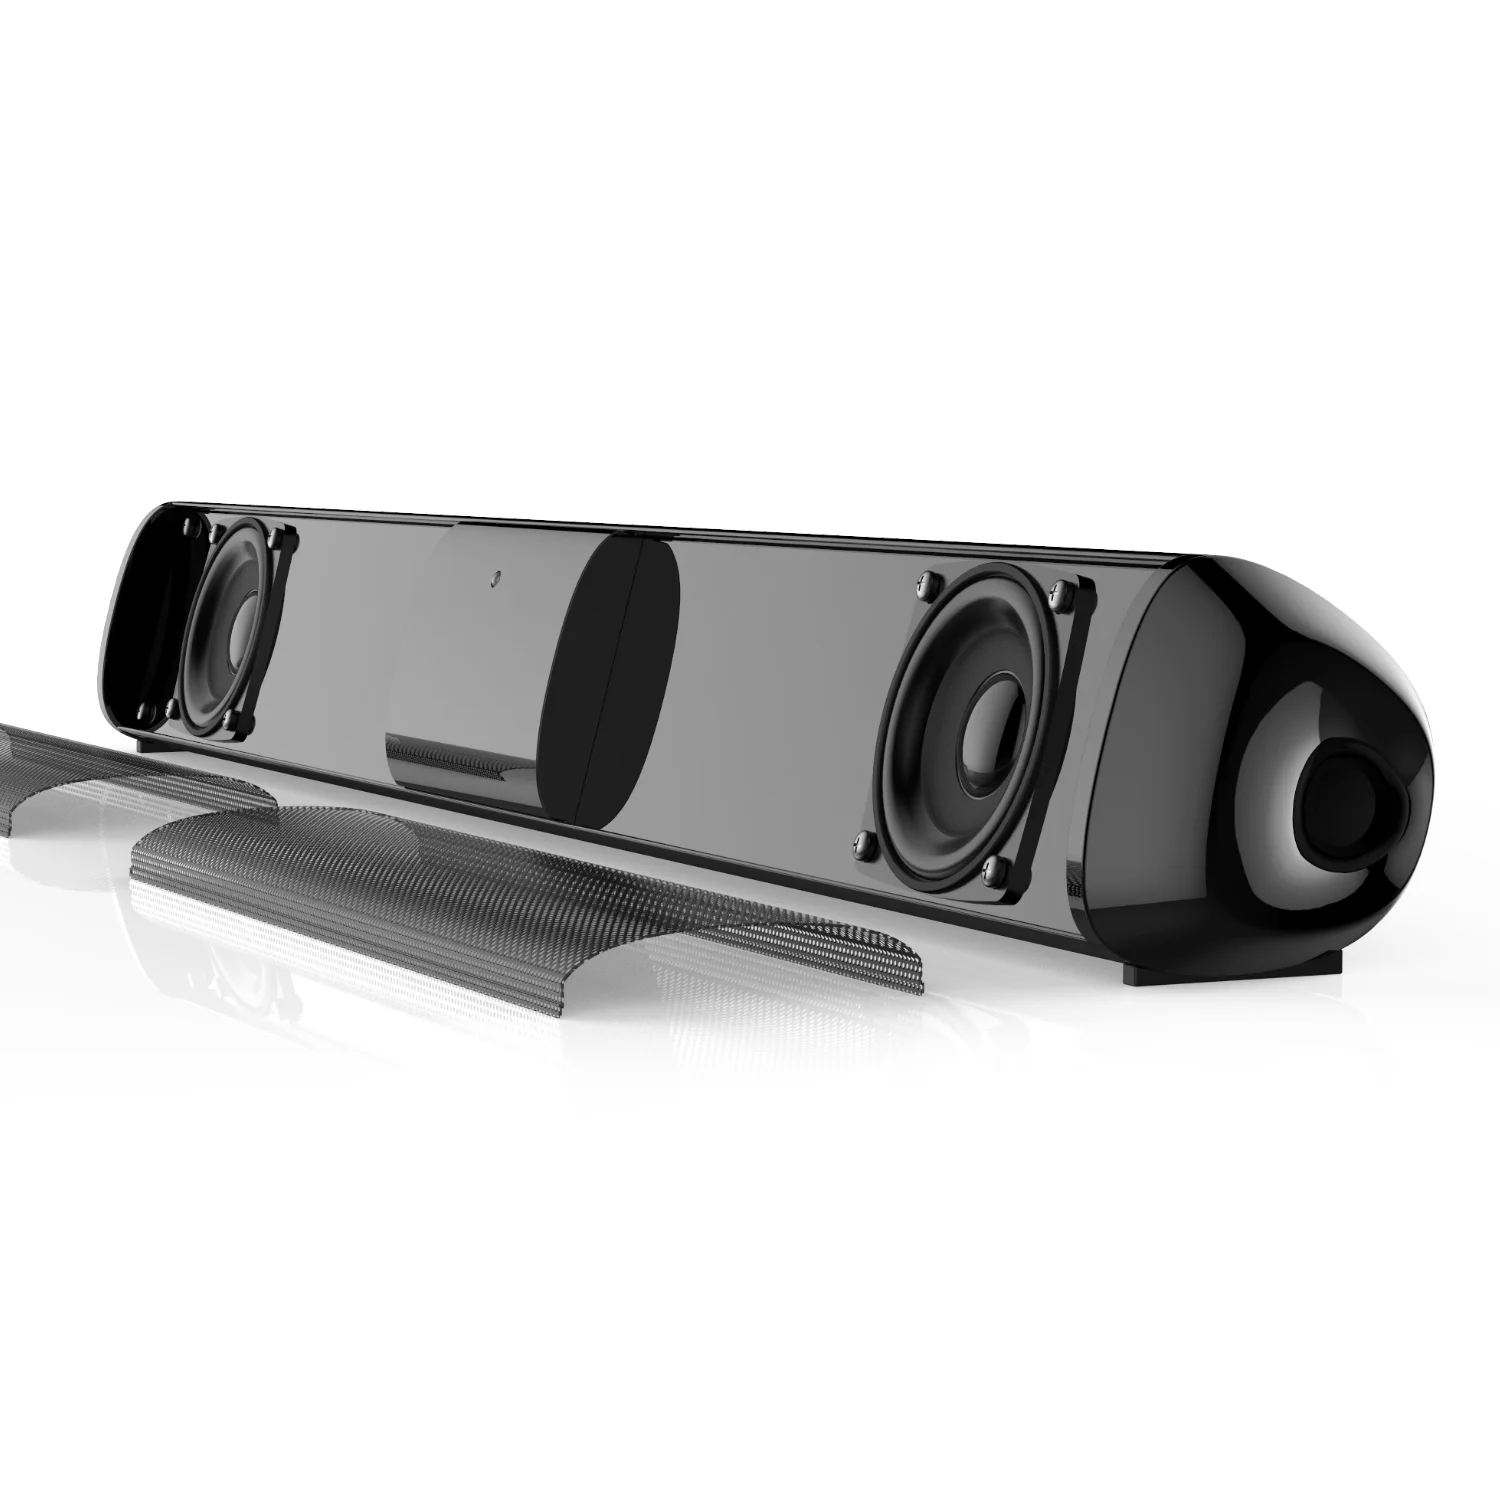 
Wireless home theatre system soundbar bluetooth speaker sound bar with subwoofer support FM radio /TF card/AUX/RCA 